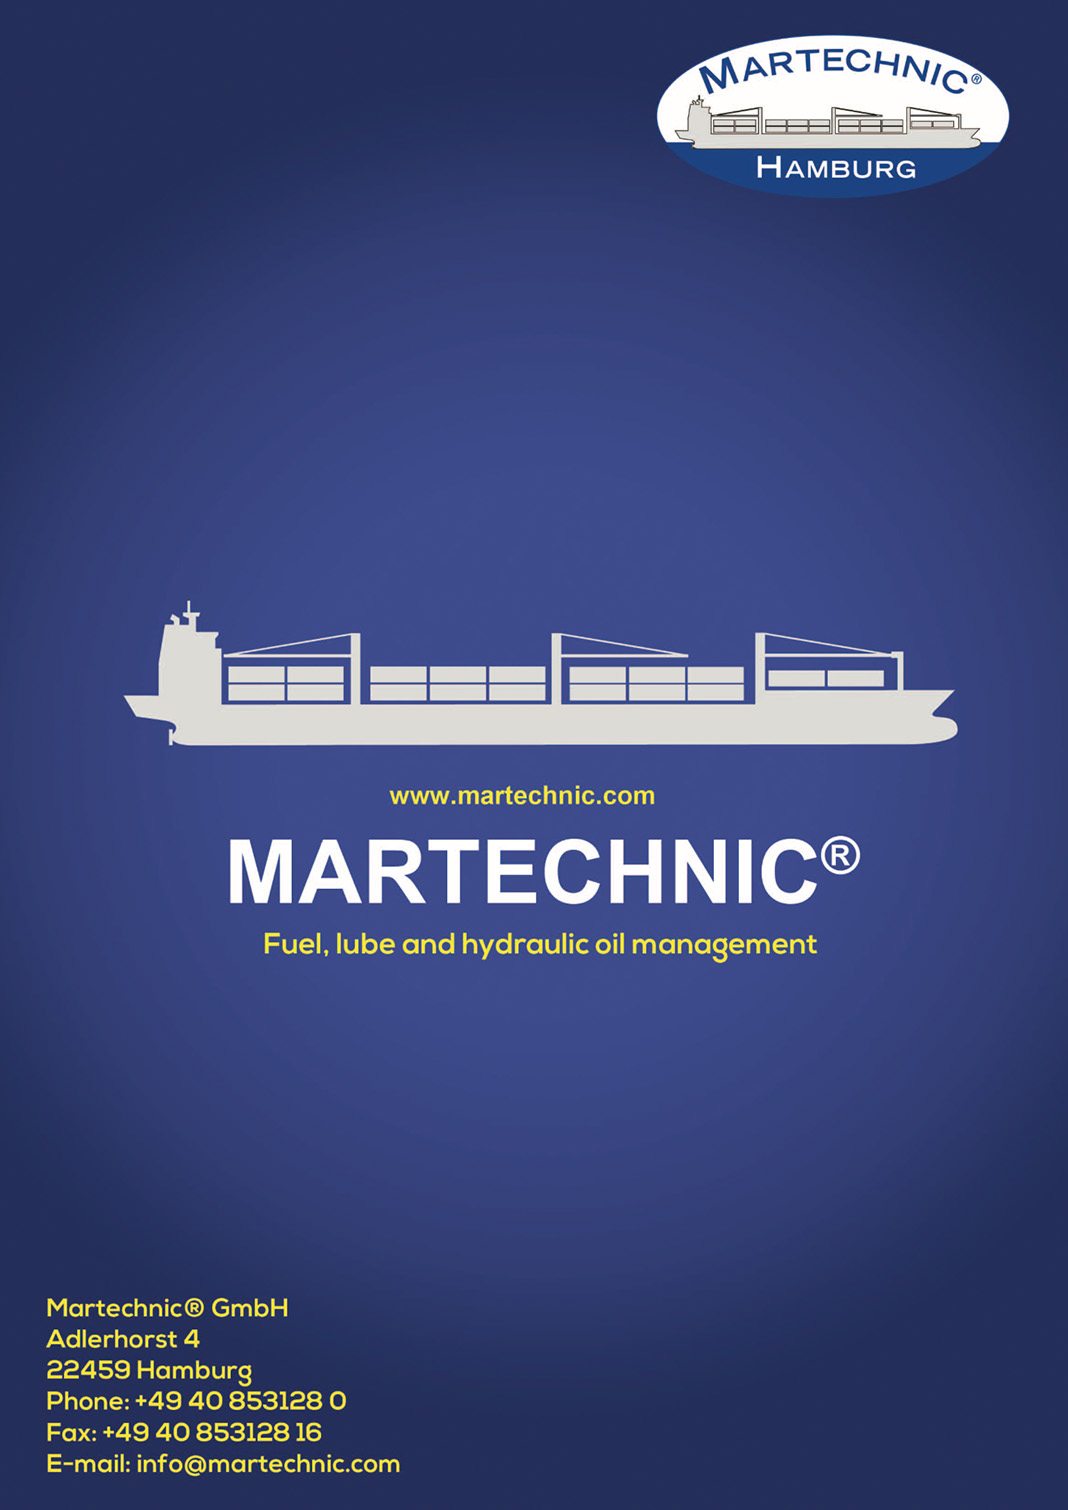 Martechnic monitors critical fluids for maritime applications|